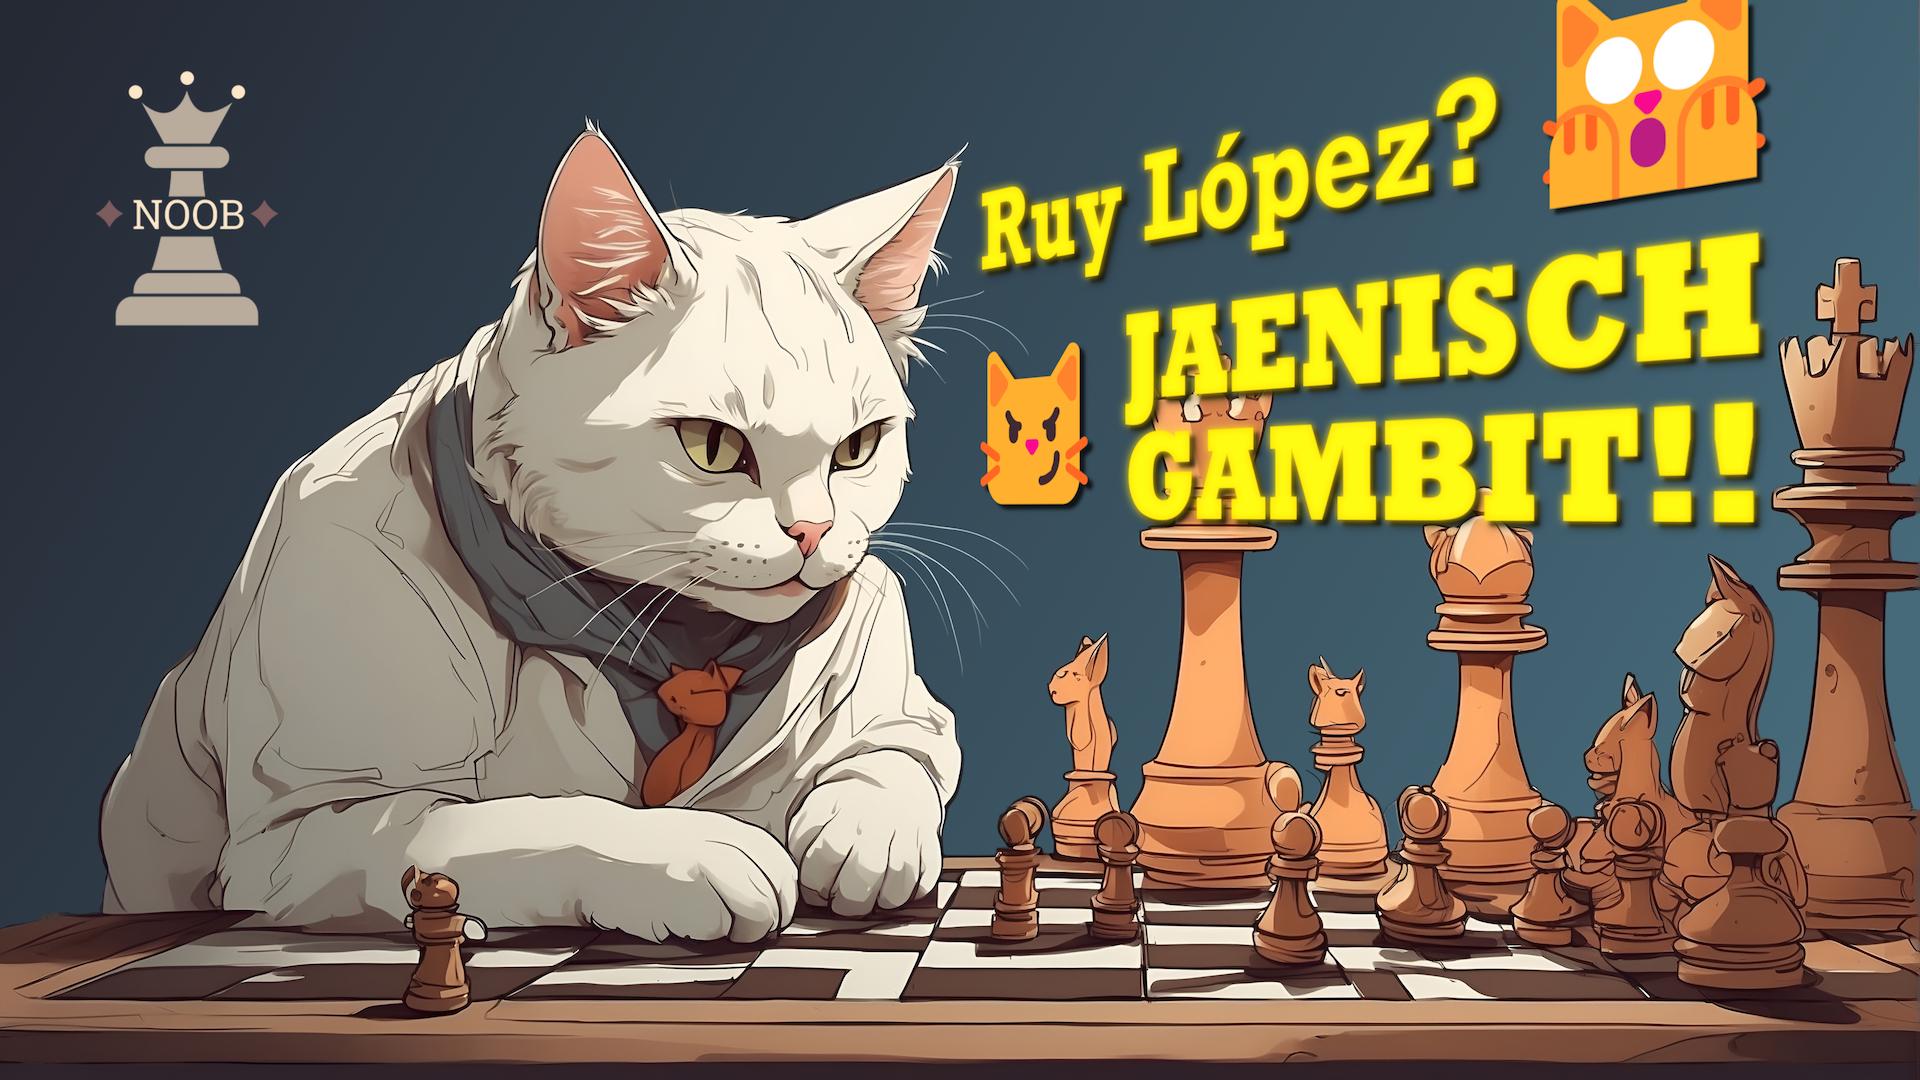 The Most Aggressive Schliemann Gambit Against Ruy Lopez [TRAPS